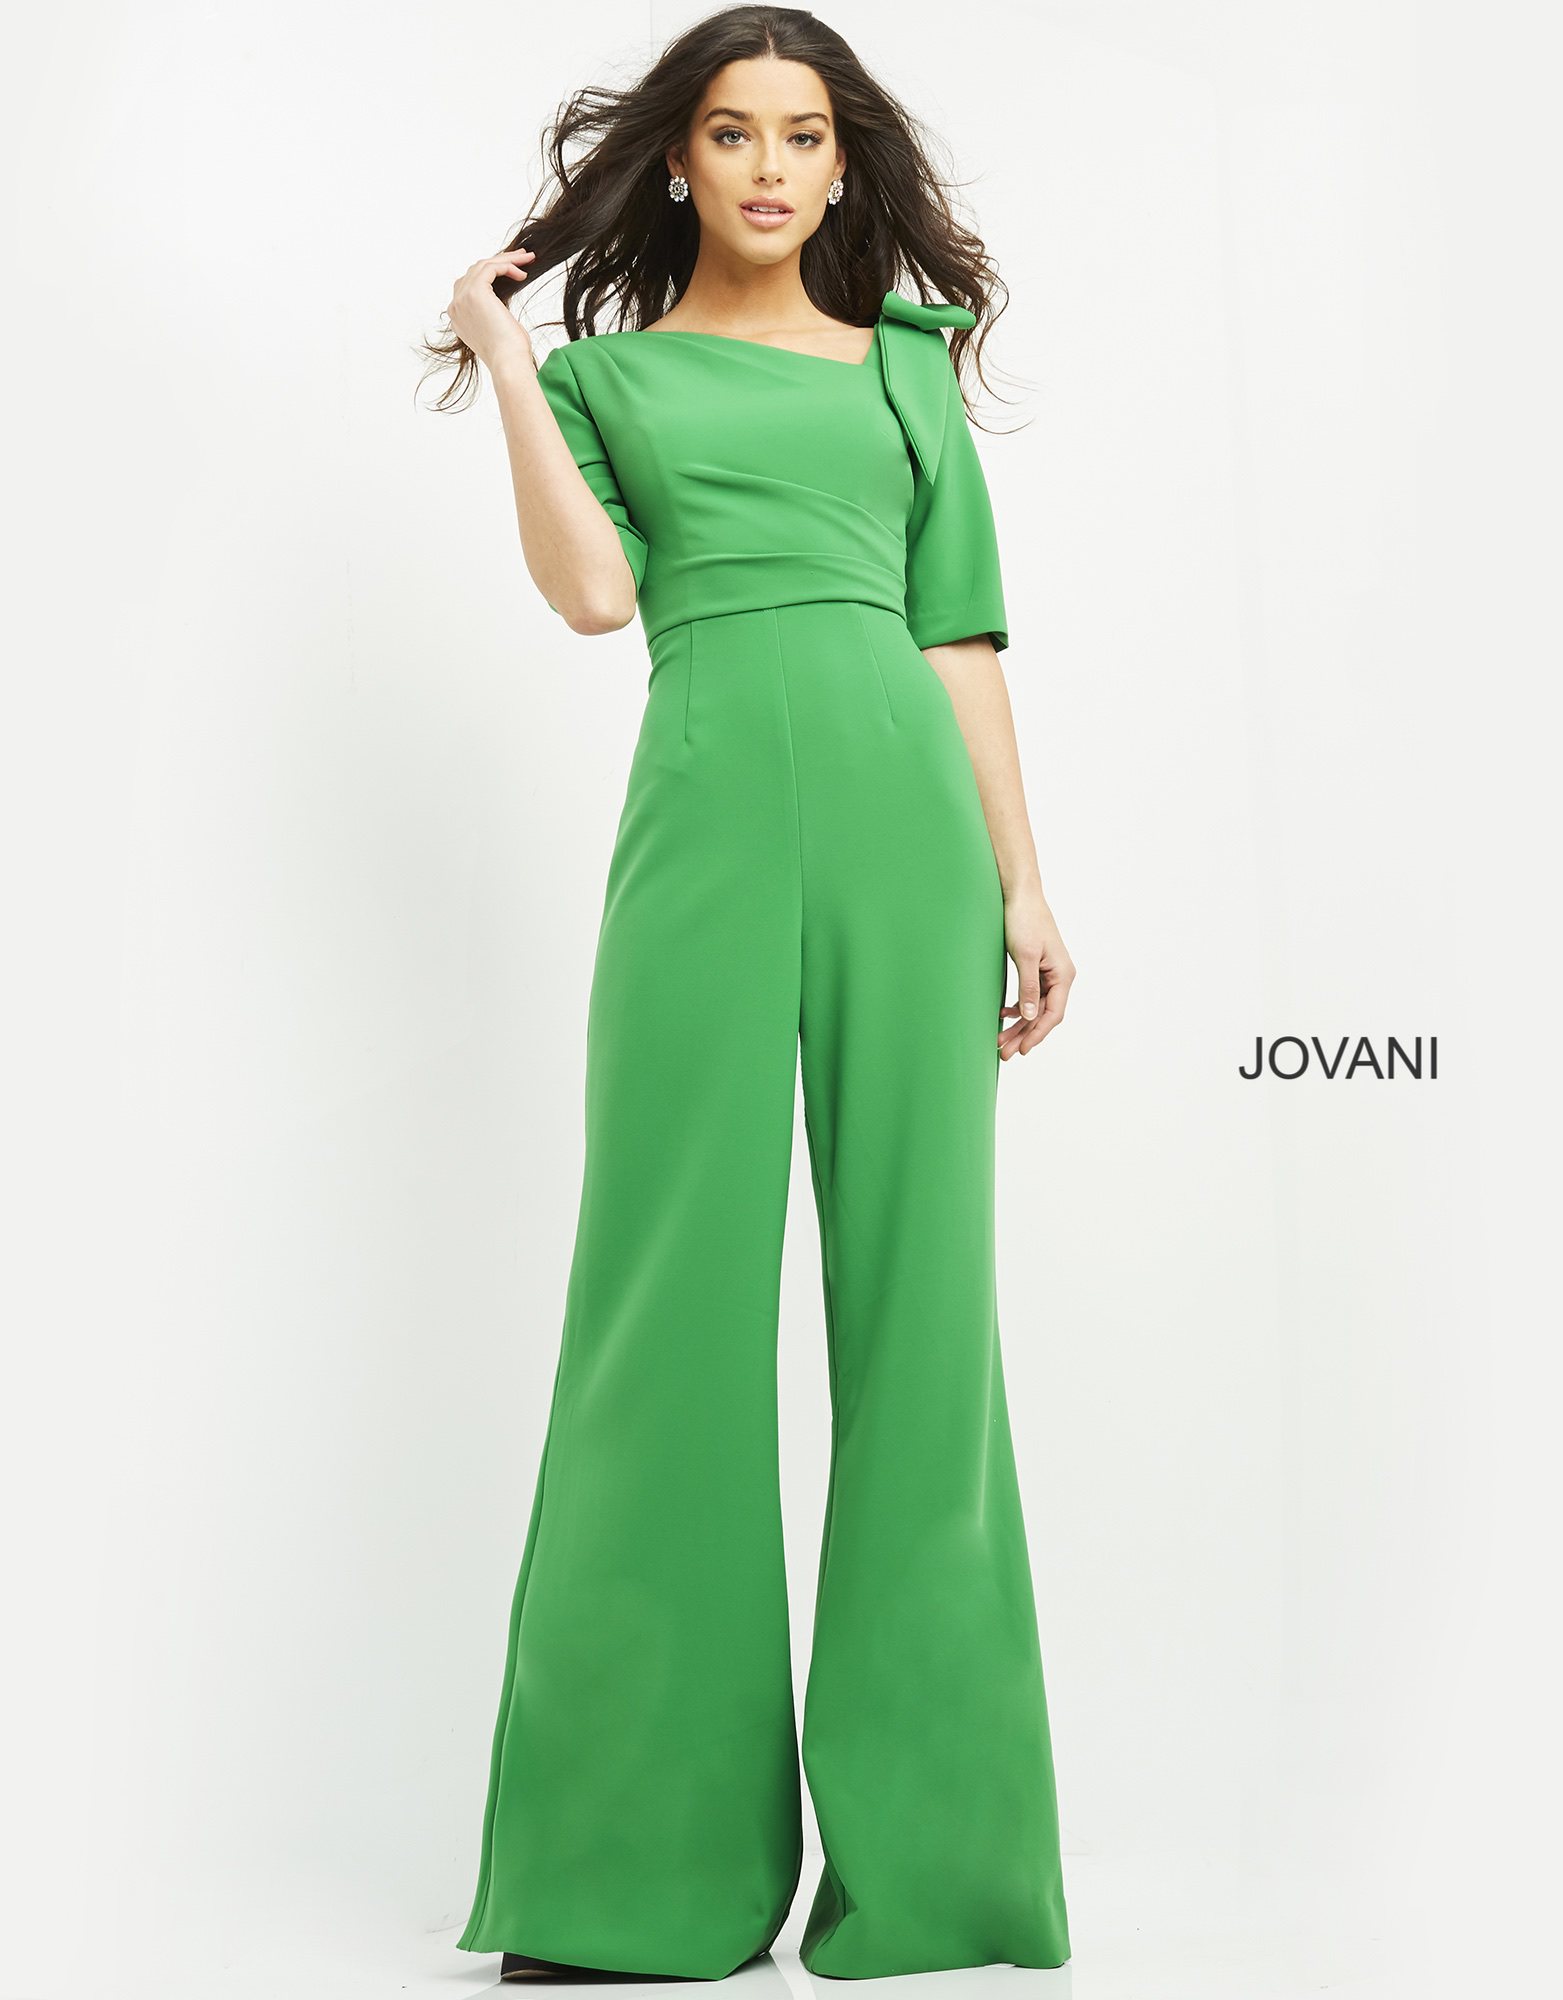 Jovani 04284 Emerald Asymmetric Neckline Jumpsuit